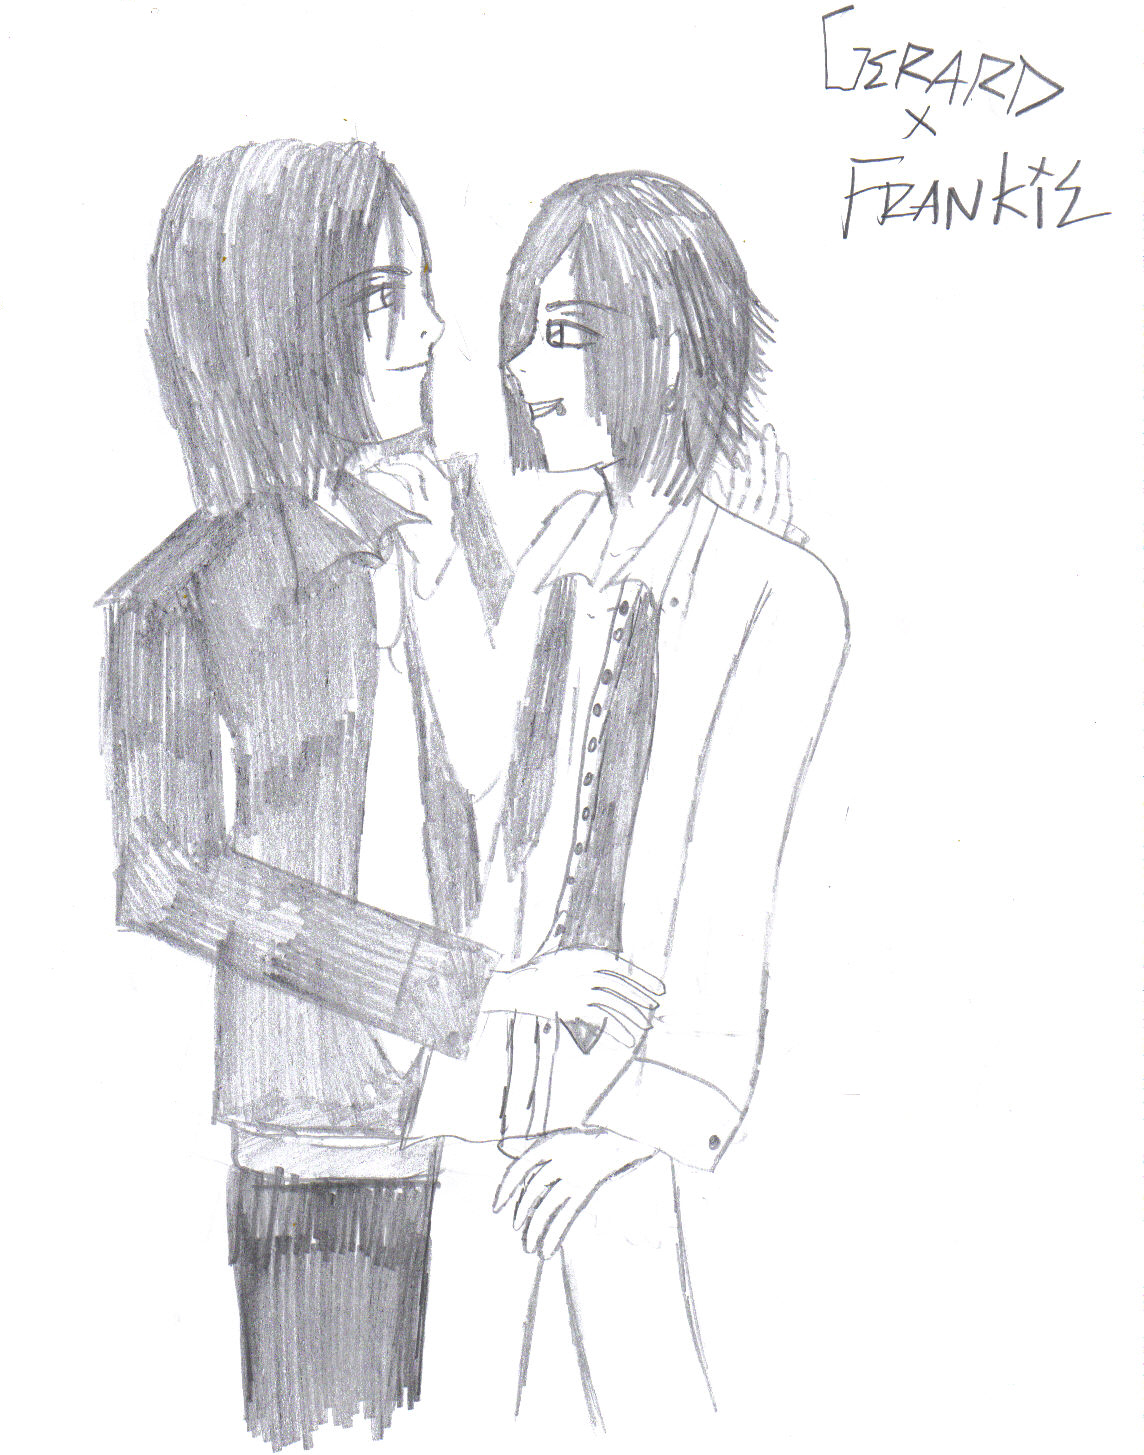 Gerard and Frankie (No pants =D) by gerard_frankie_lvr